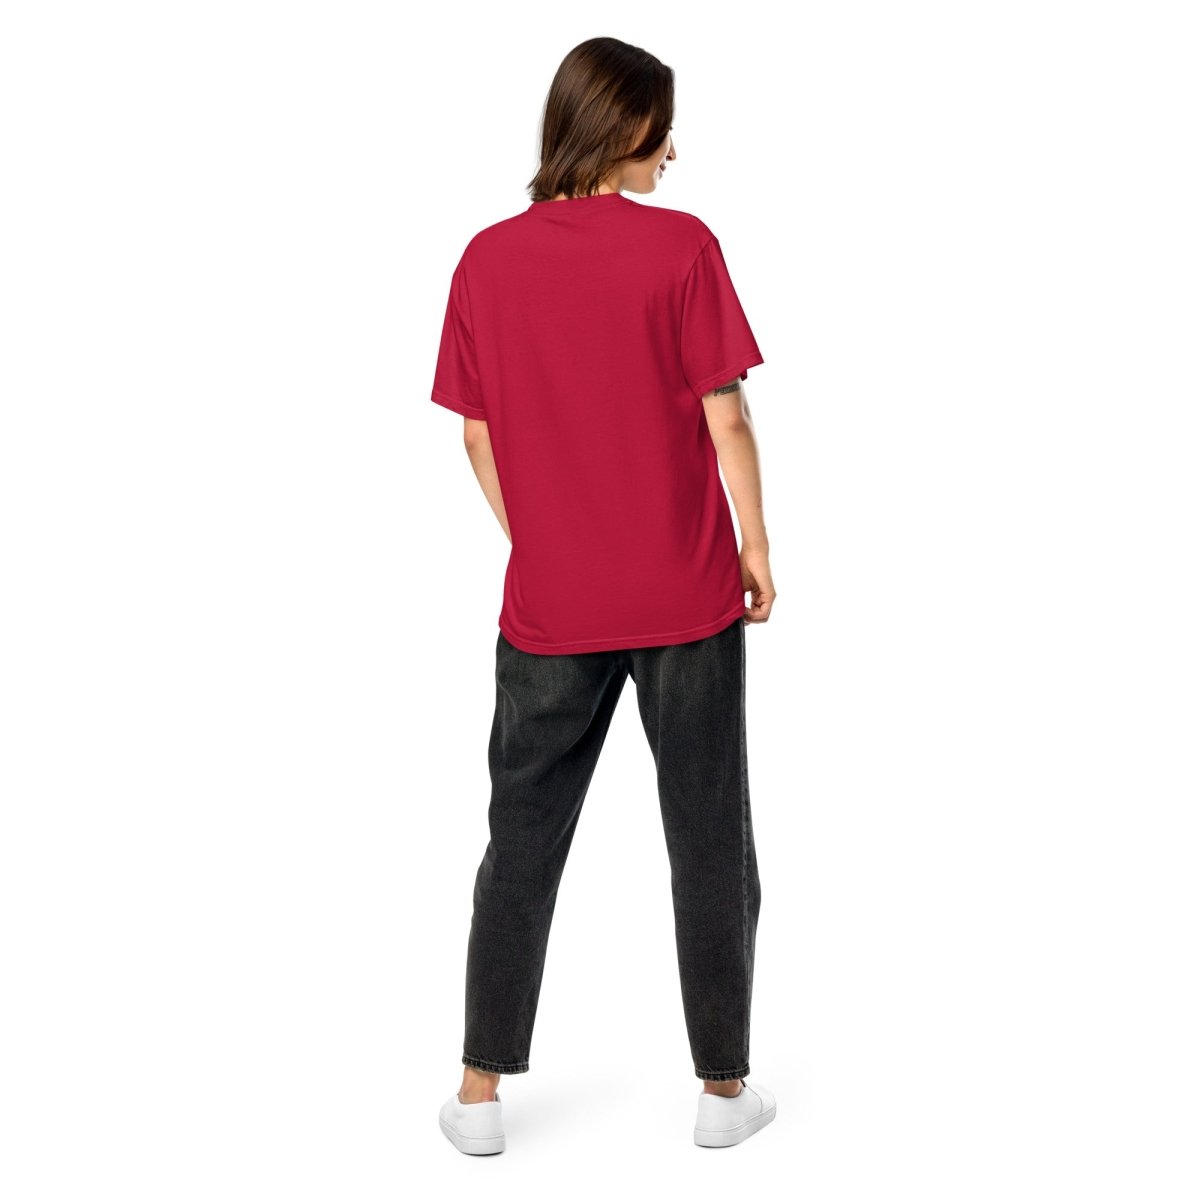 Unisex garment-dyed heavyweight t-shirt - Wifler Industries--Wifler Industries-3534757_15114--Black-S--Unisex garment-dyed